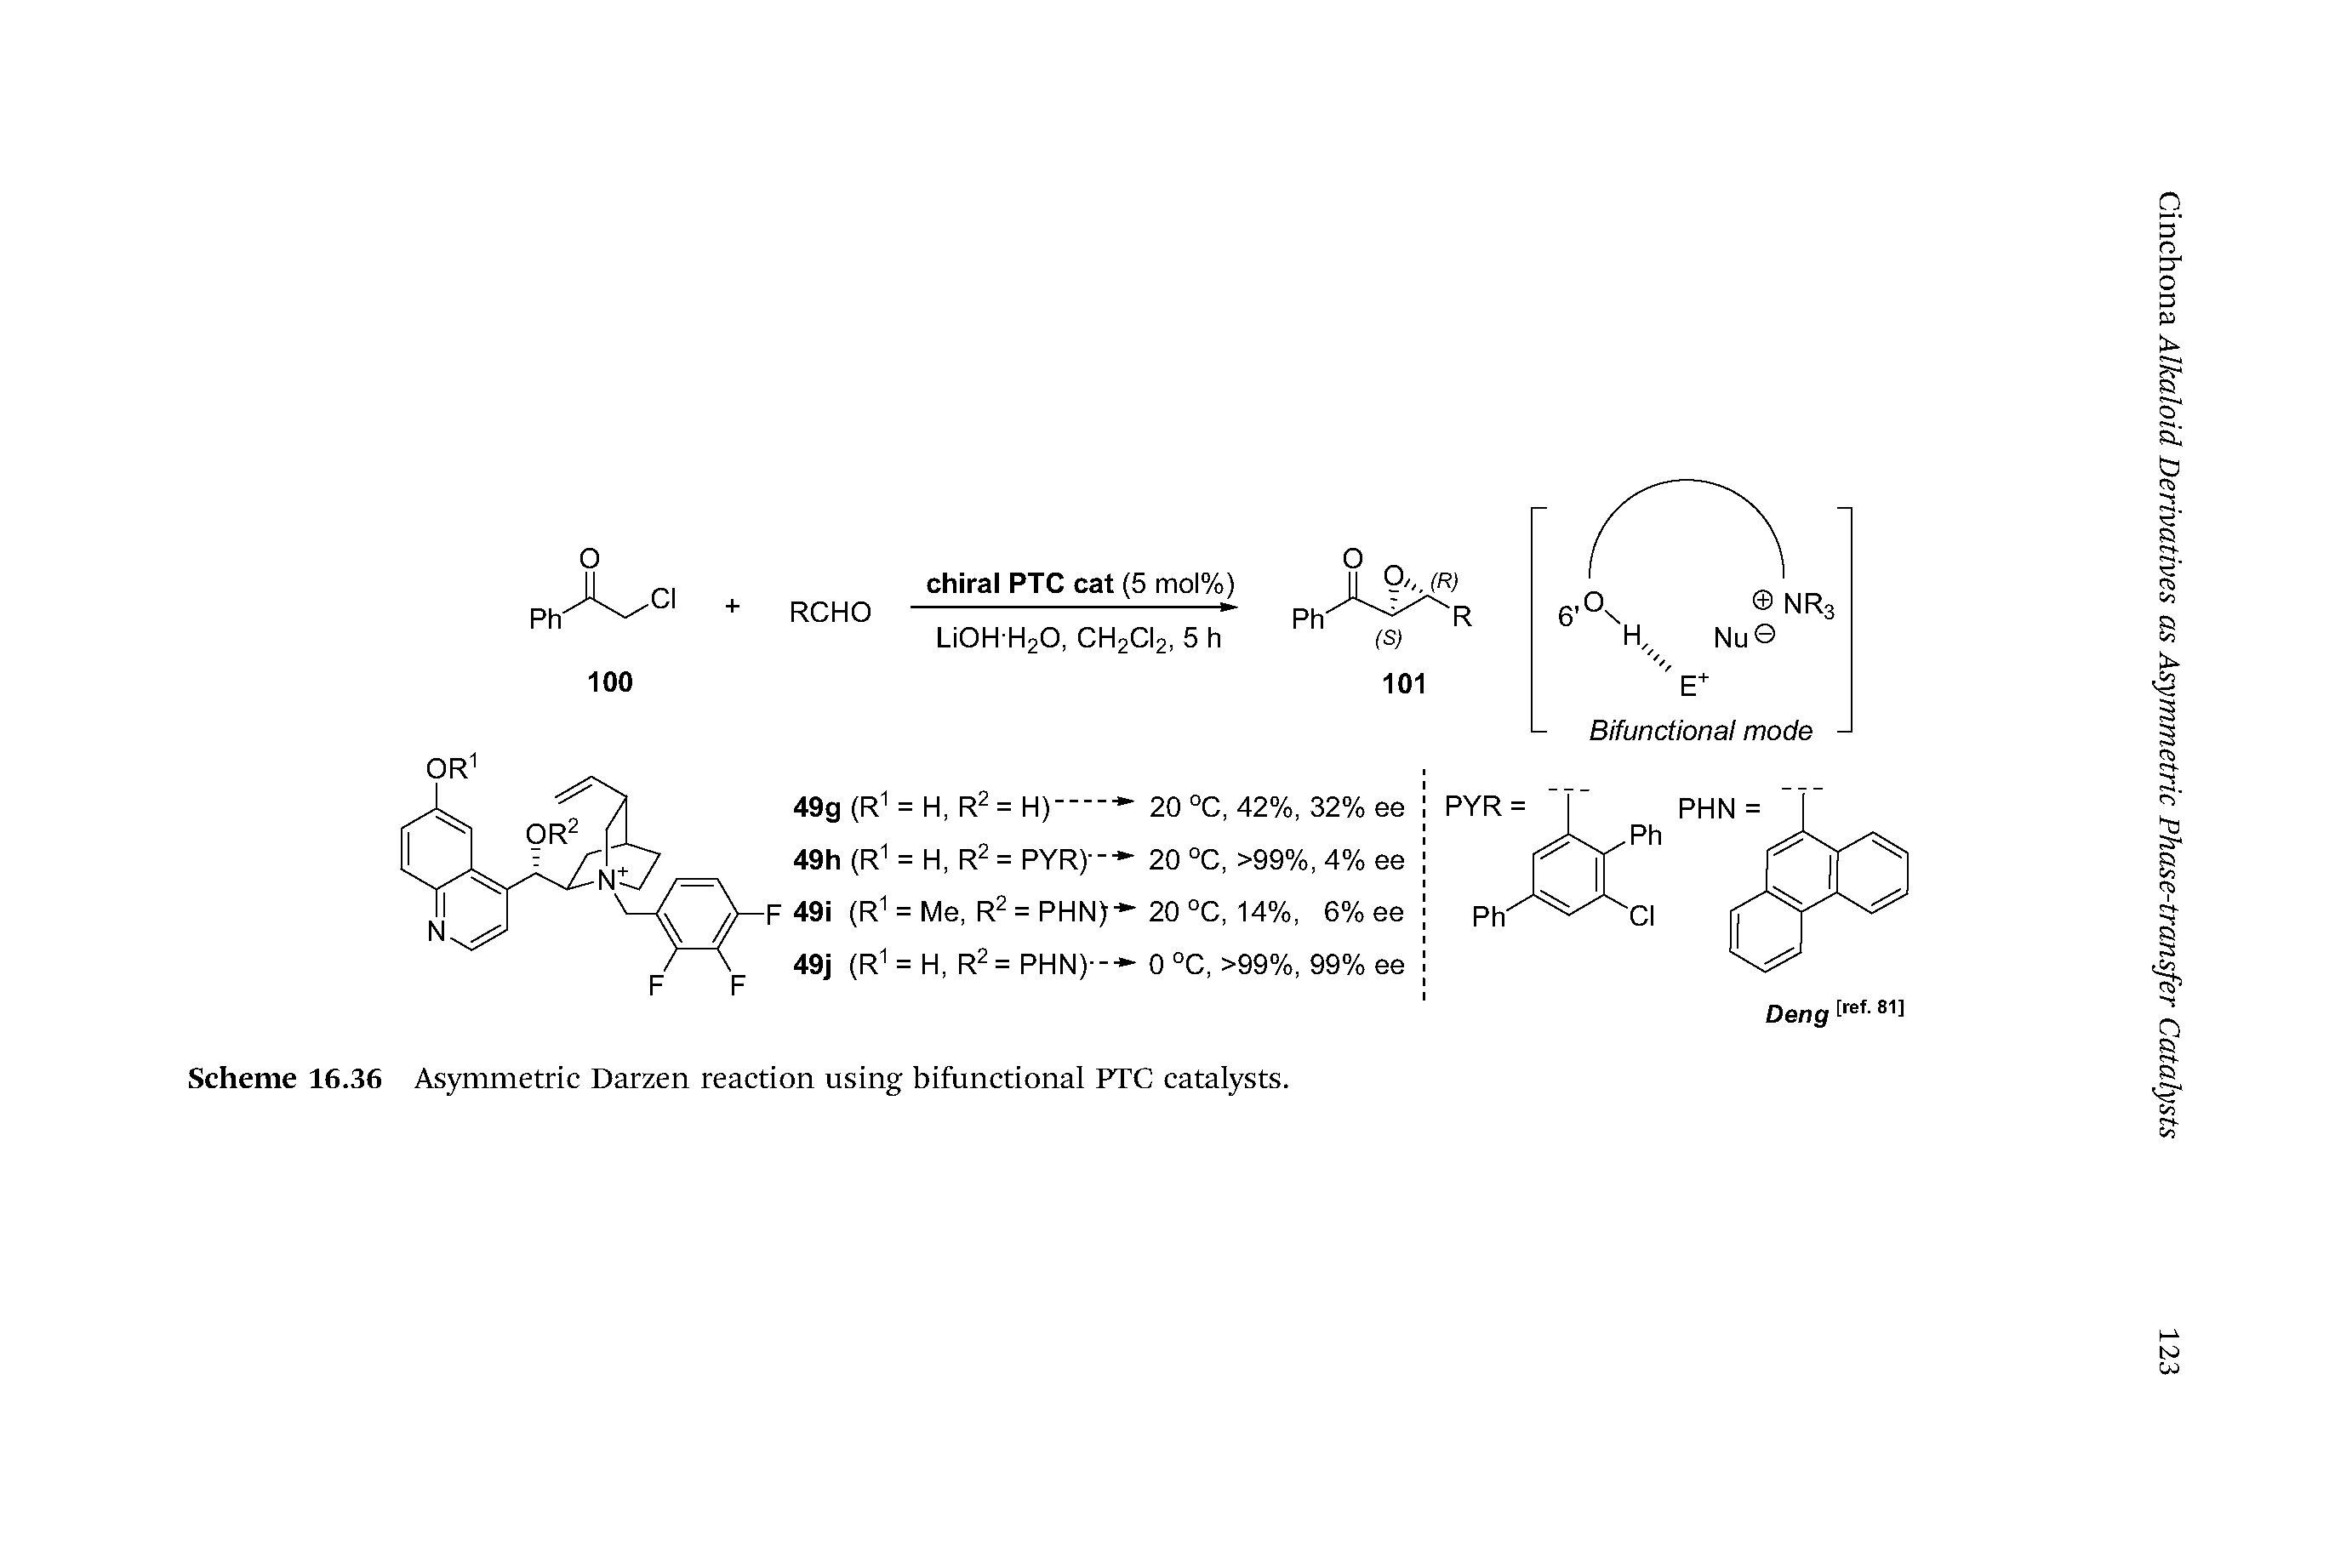 Scheme 16.36 Asymmetric Darzen reaction using bifunctional PTC catalysts.